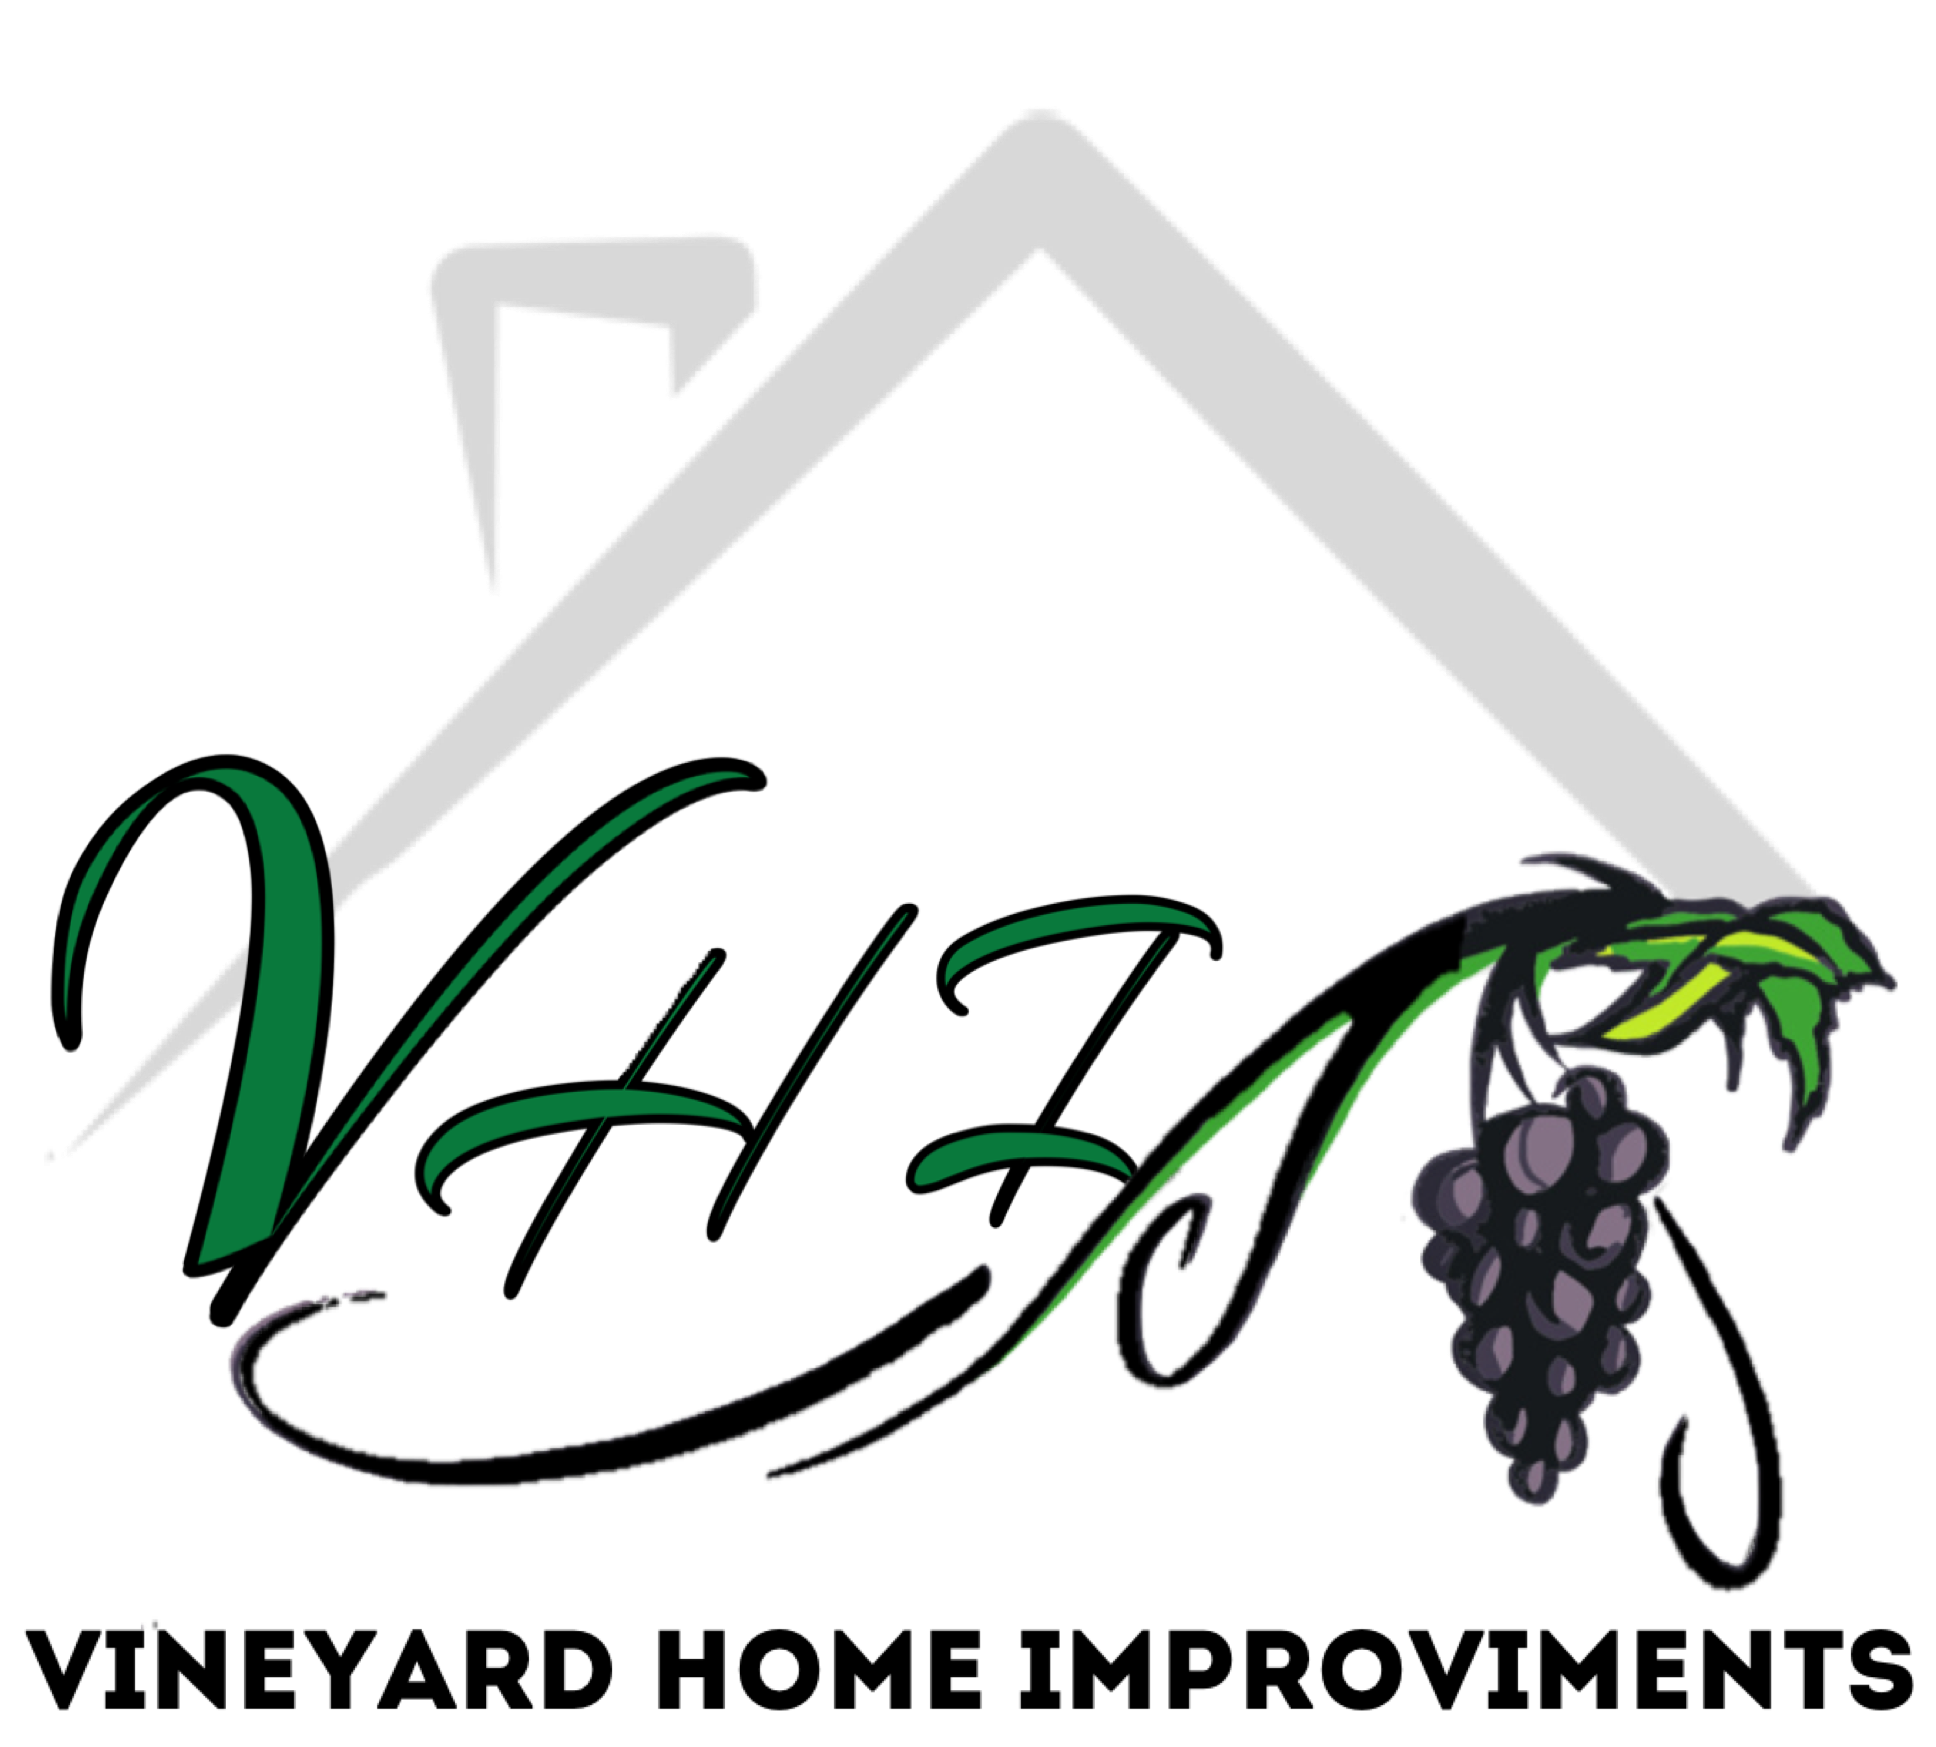 Vineyard Home Improvements, Inc